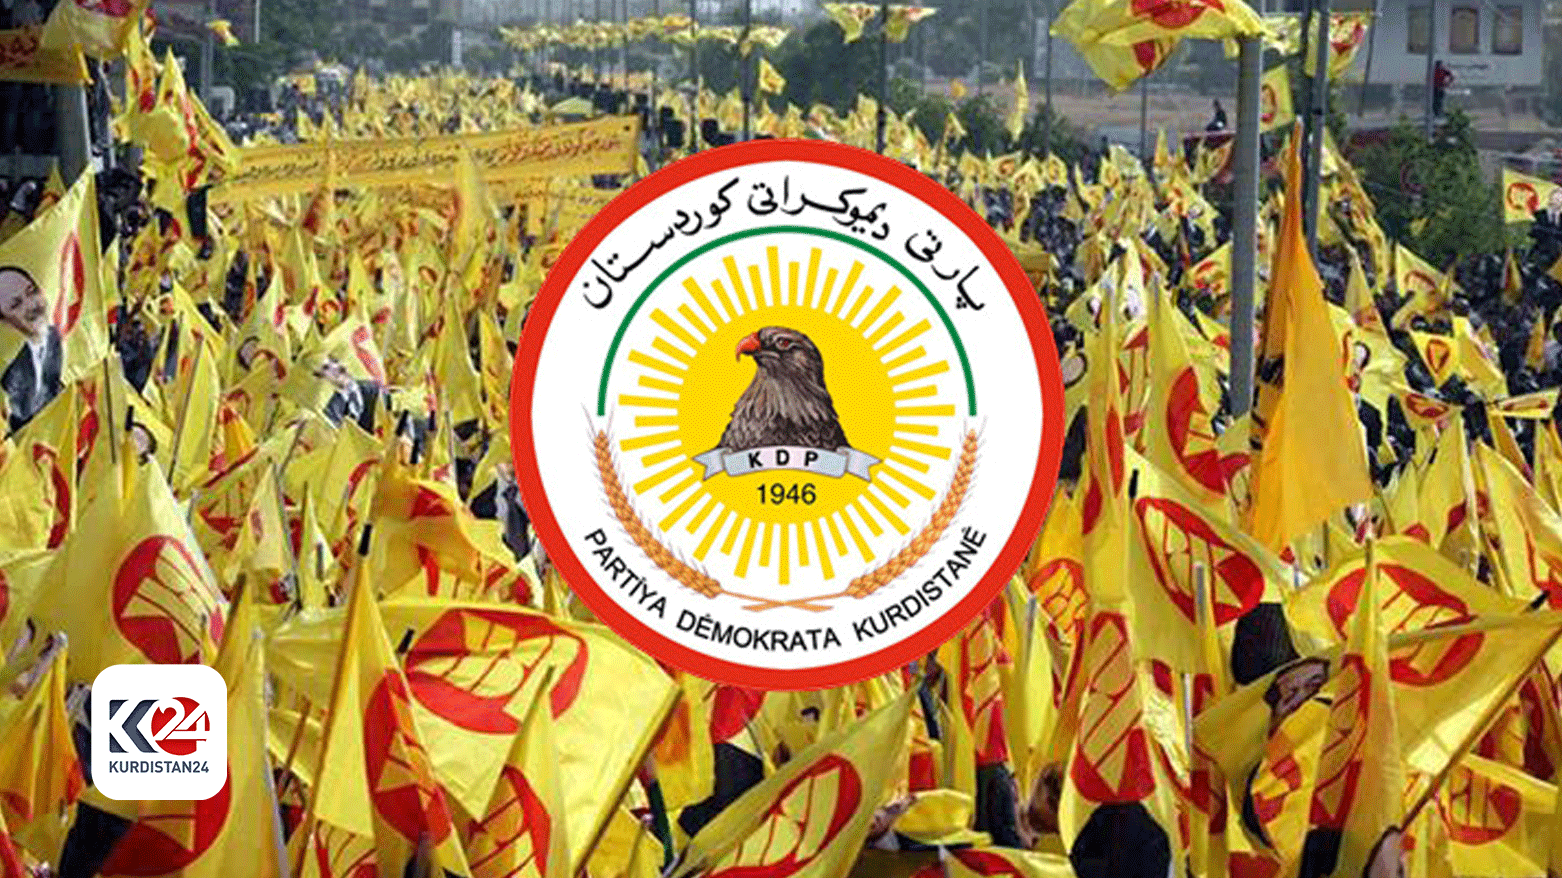 The logo of Kurdistan Democratic Party (KDP)